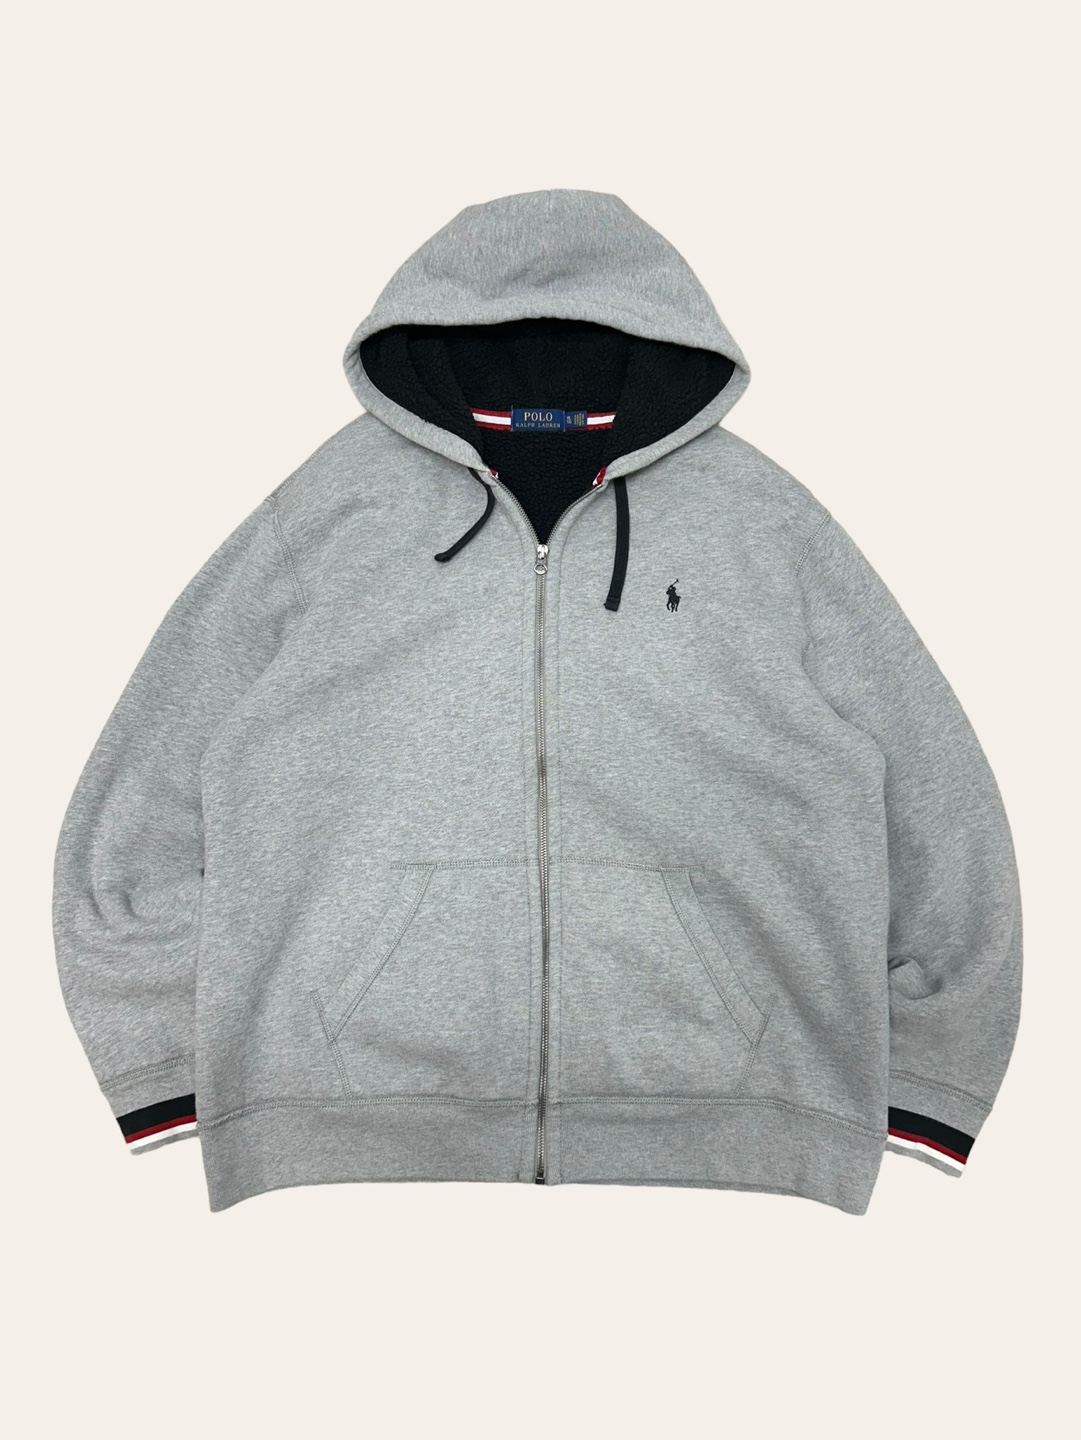 Polo ralph lauren gray sherpa lined hoodie zip up jacket XL